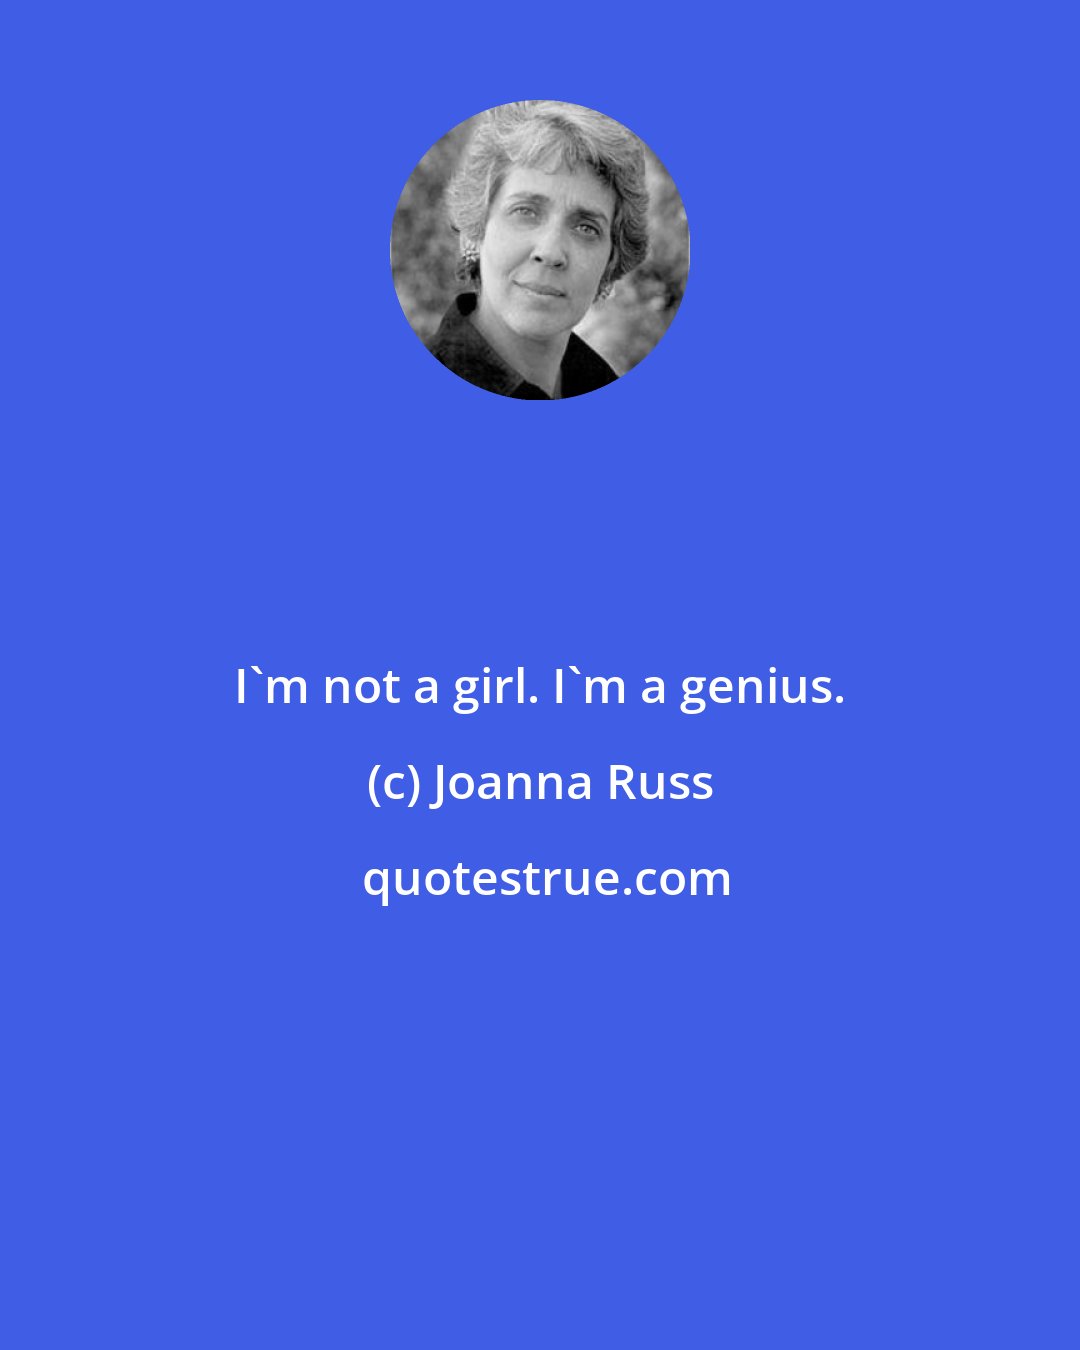 Joanna Russ: I'm not a girl. I'm a genius.